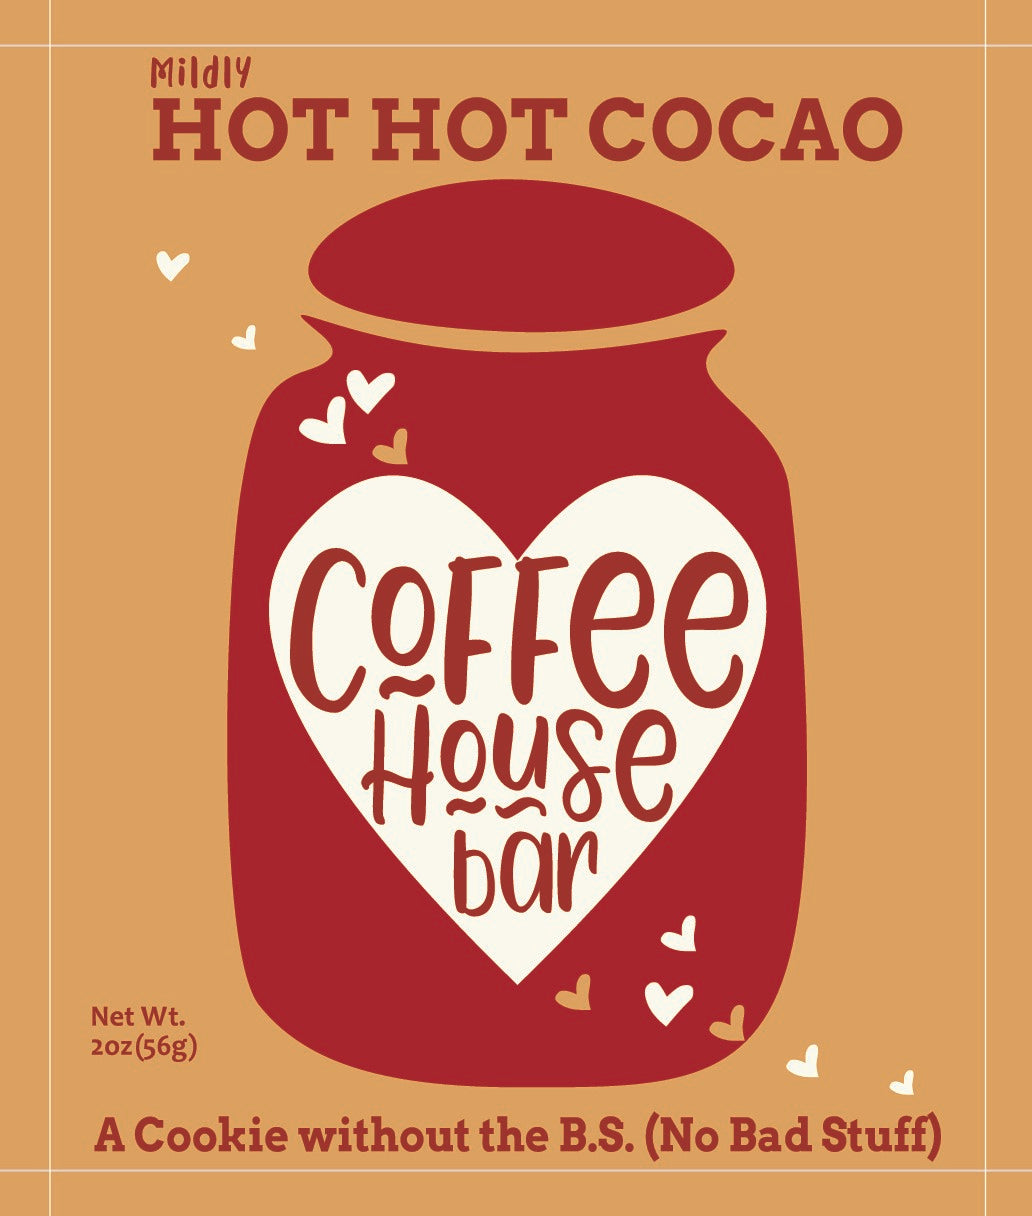 Greca de café  Hot coco bar, Coffee shop, Coffee maker